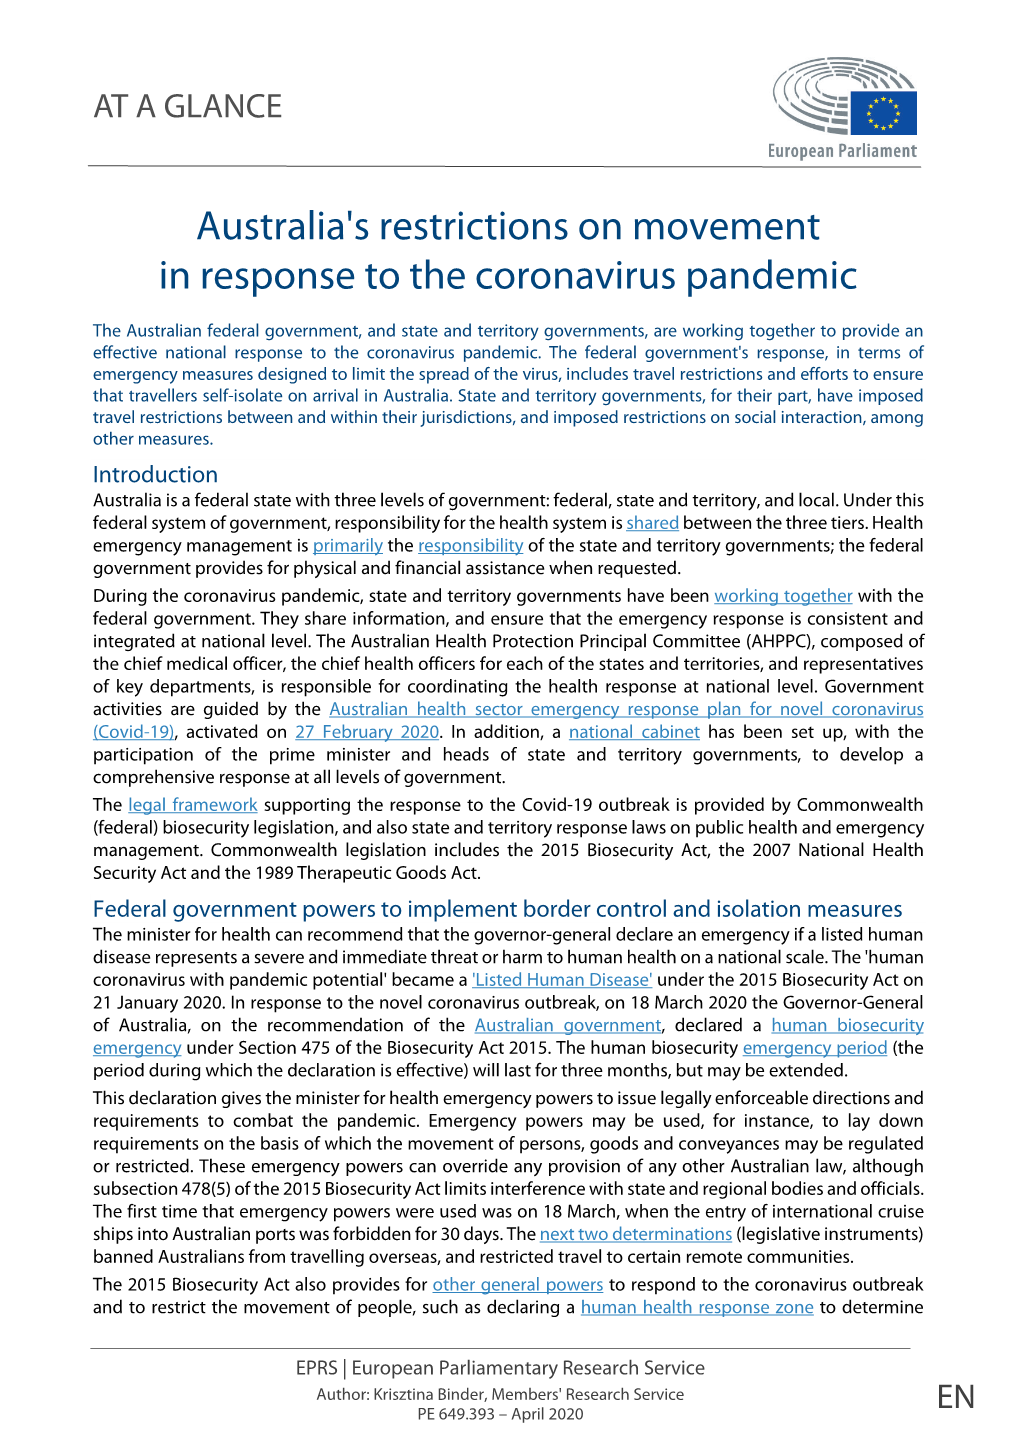 Australia's Restrictions on Movement in Response to the Coronavirus Pandemic